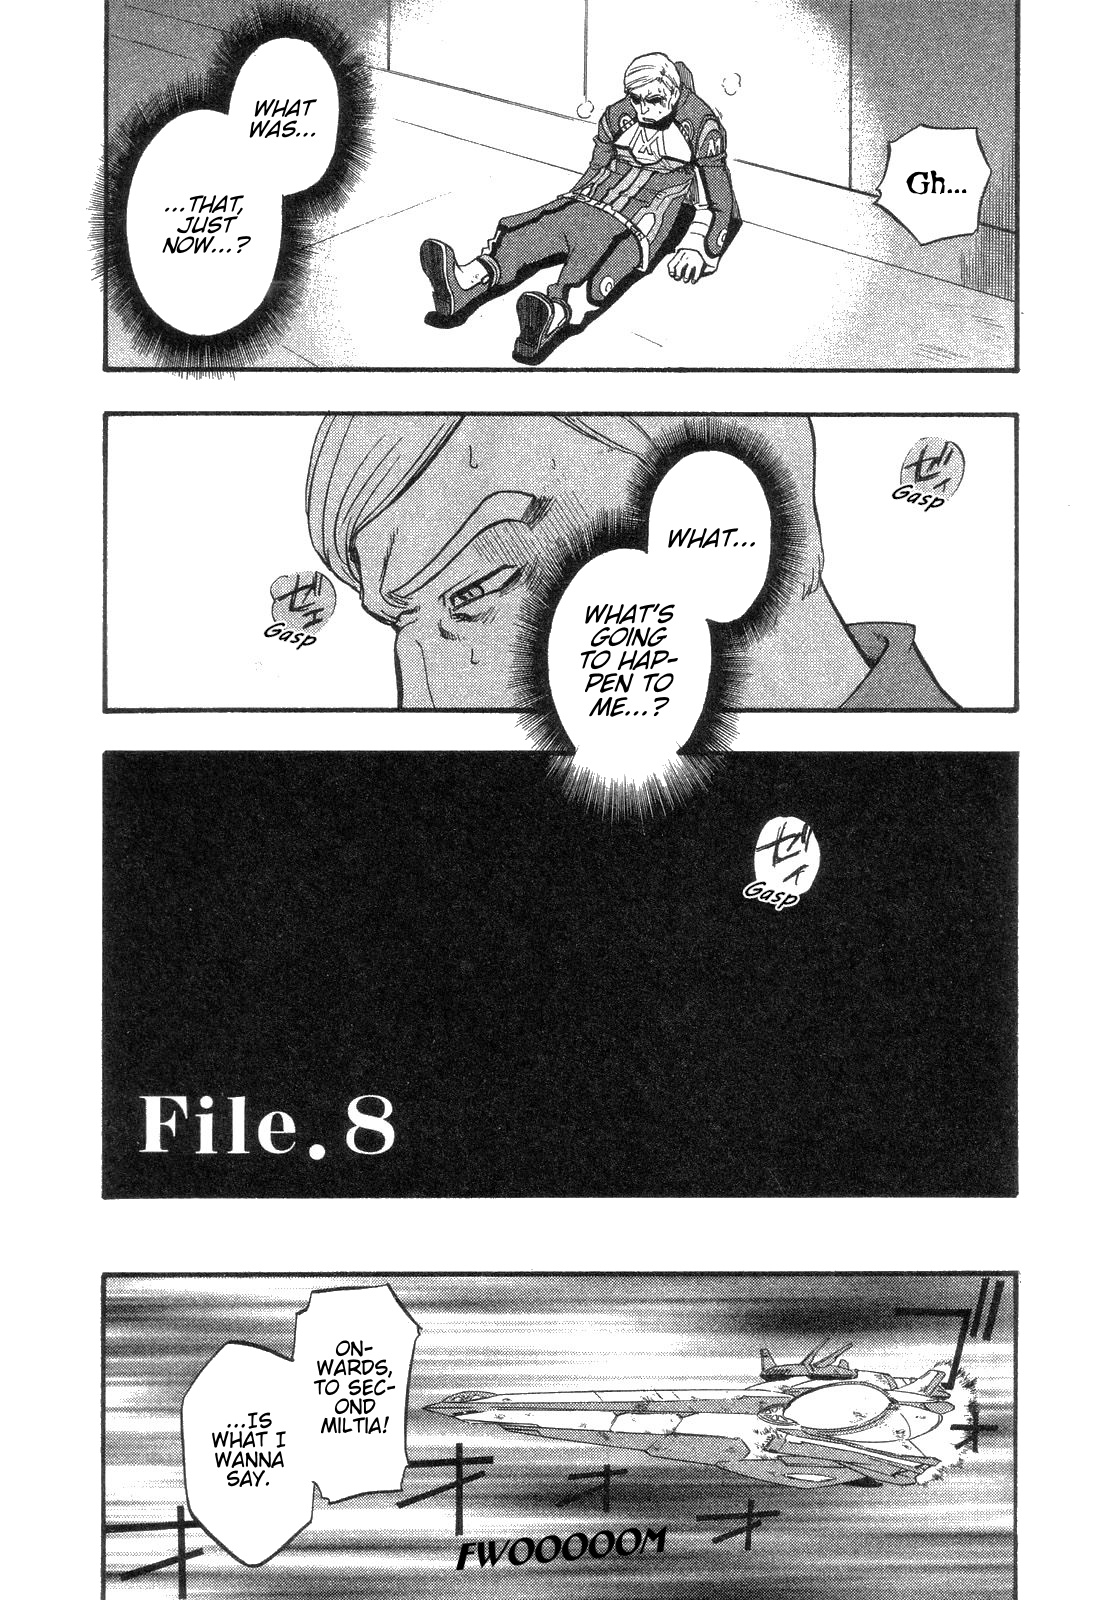 Xenosaga Episode 1 Vol.2 Chapter 8: File.8 - Picture 3